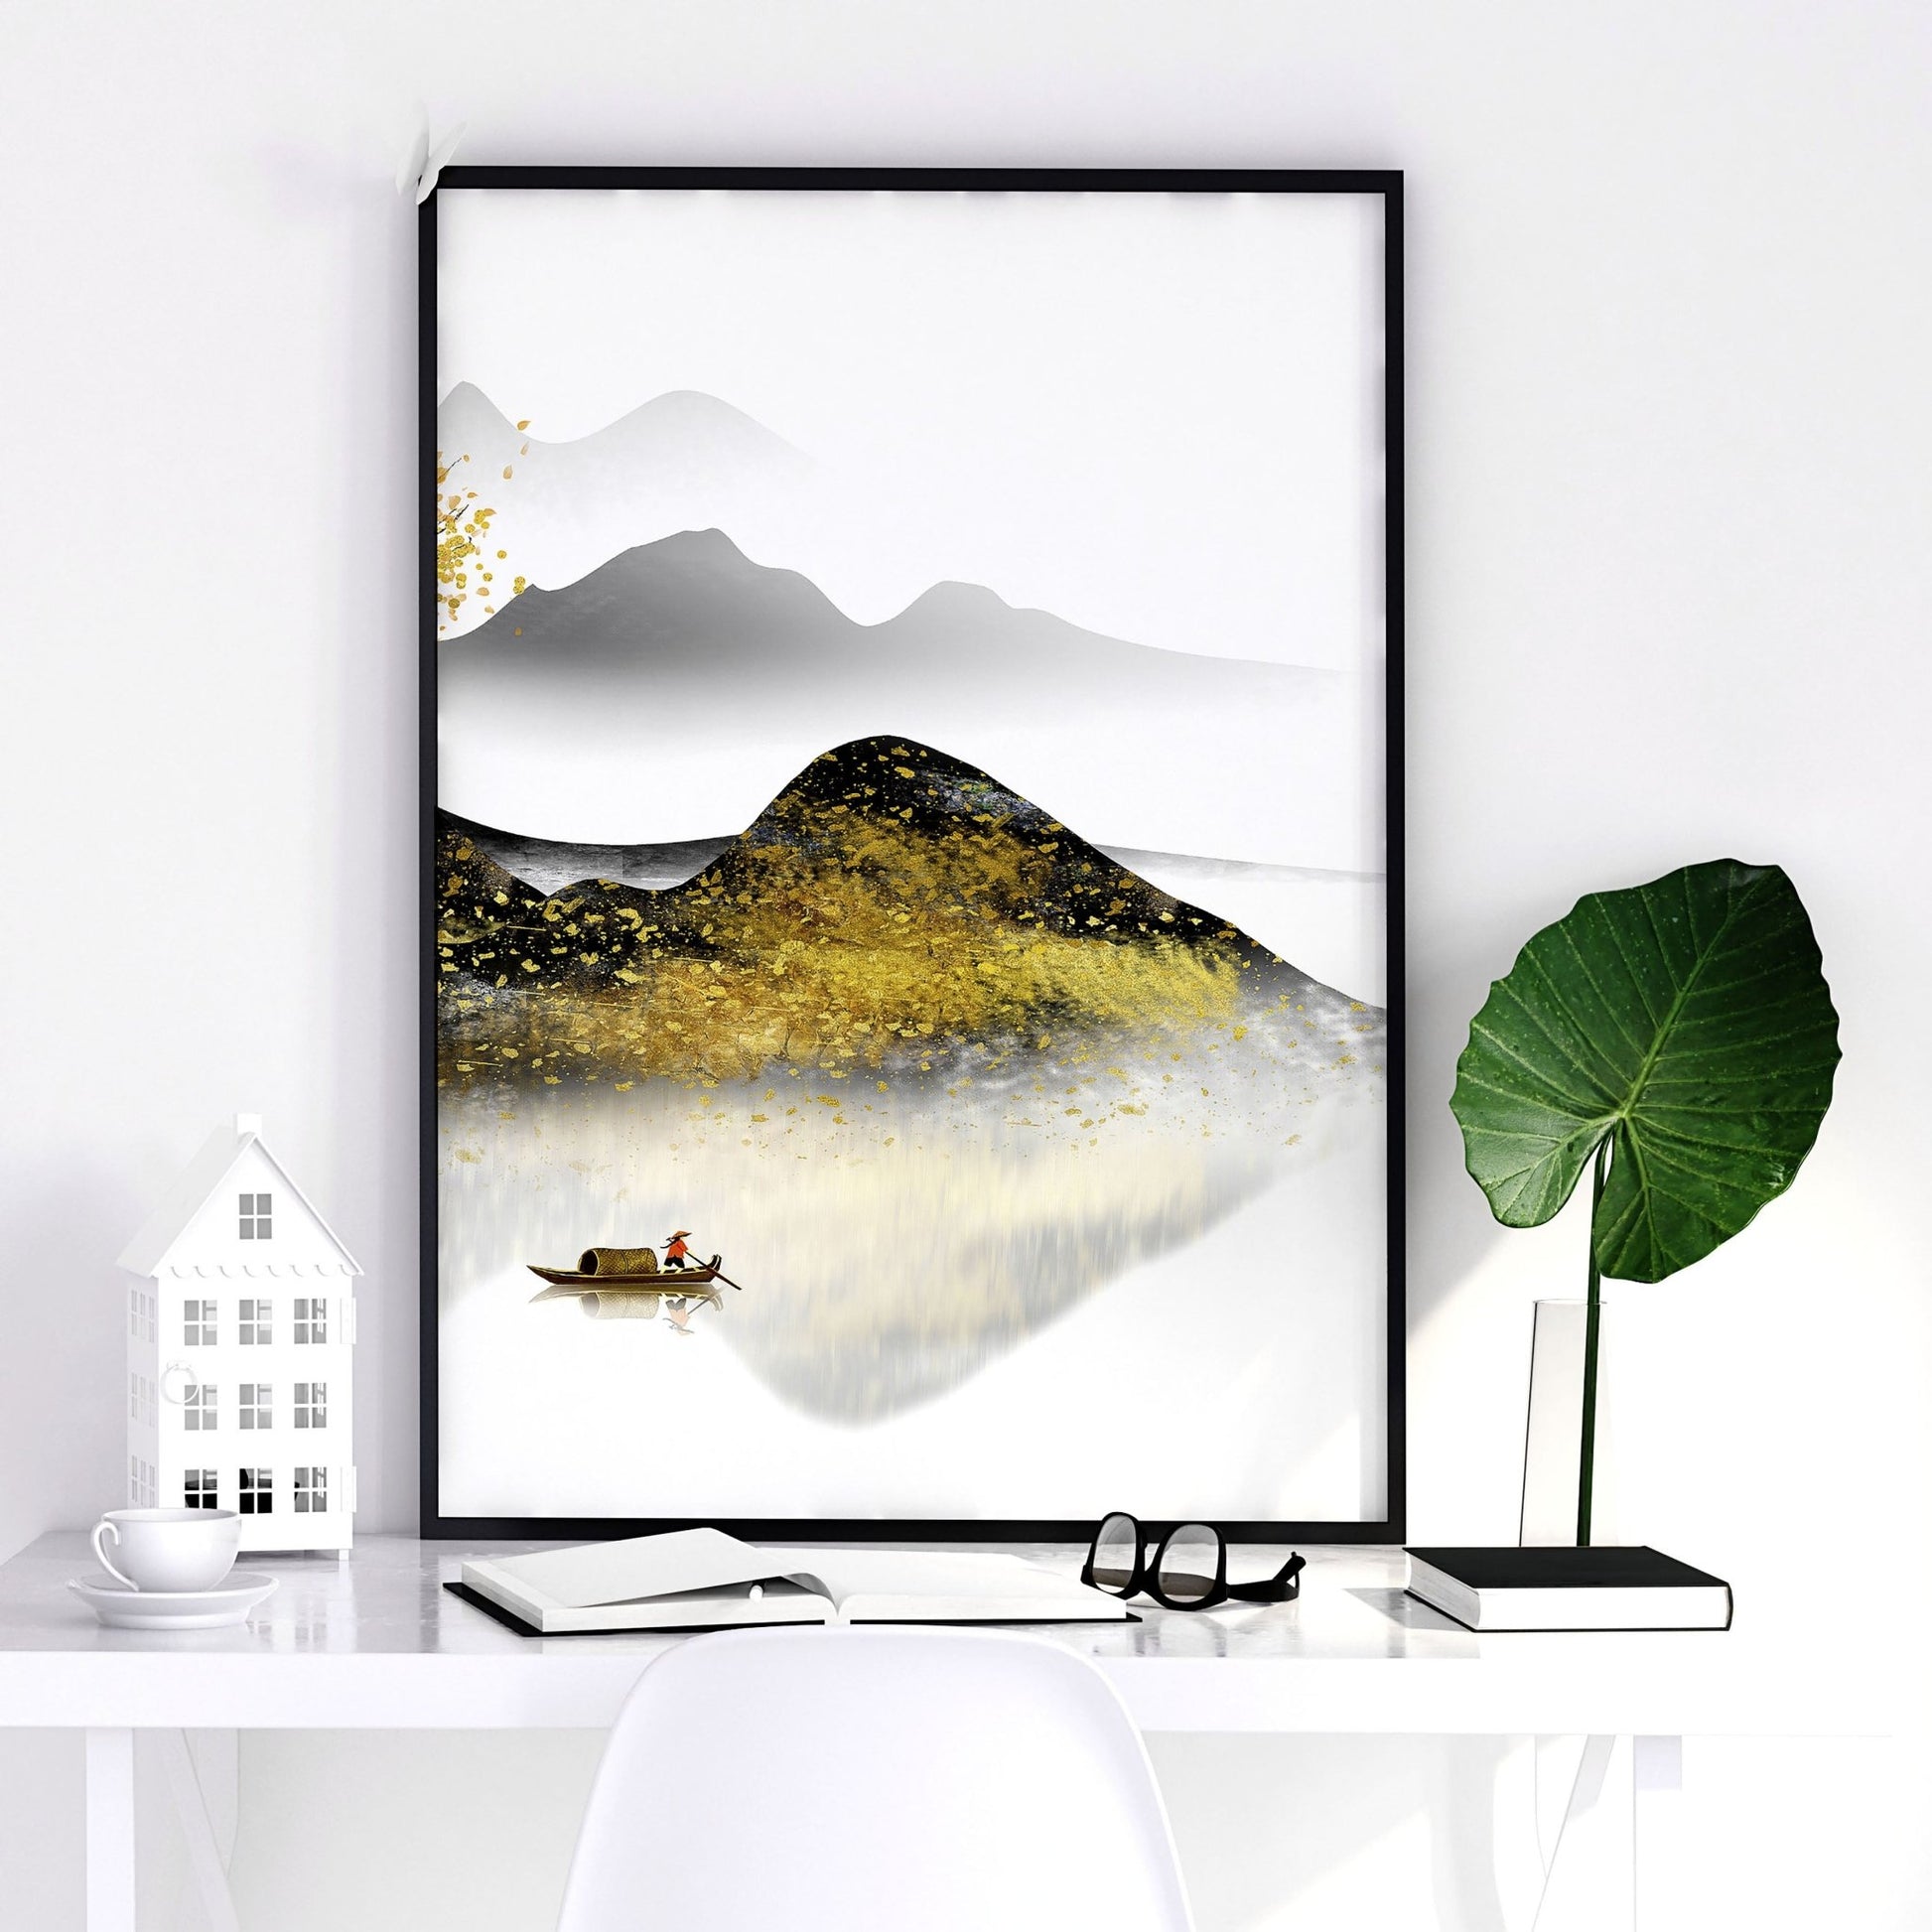 Home office decor ideas | set of 3 wall art prints - About Wall Art